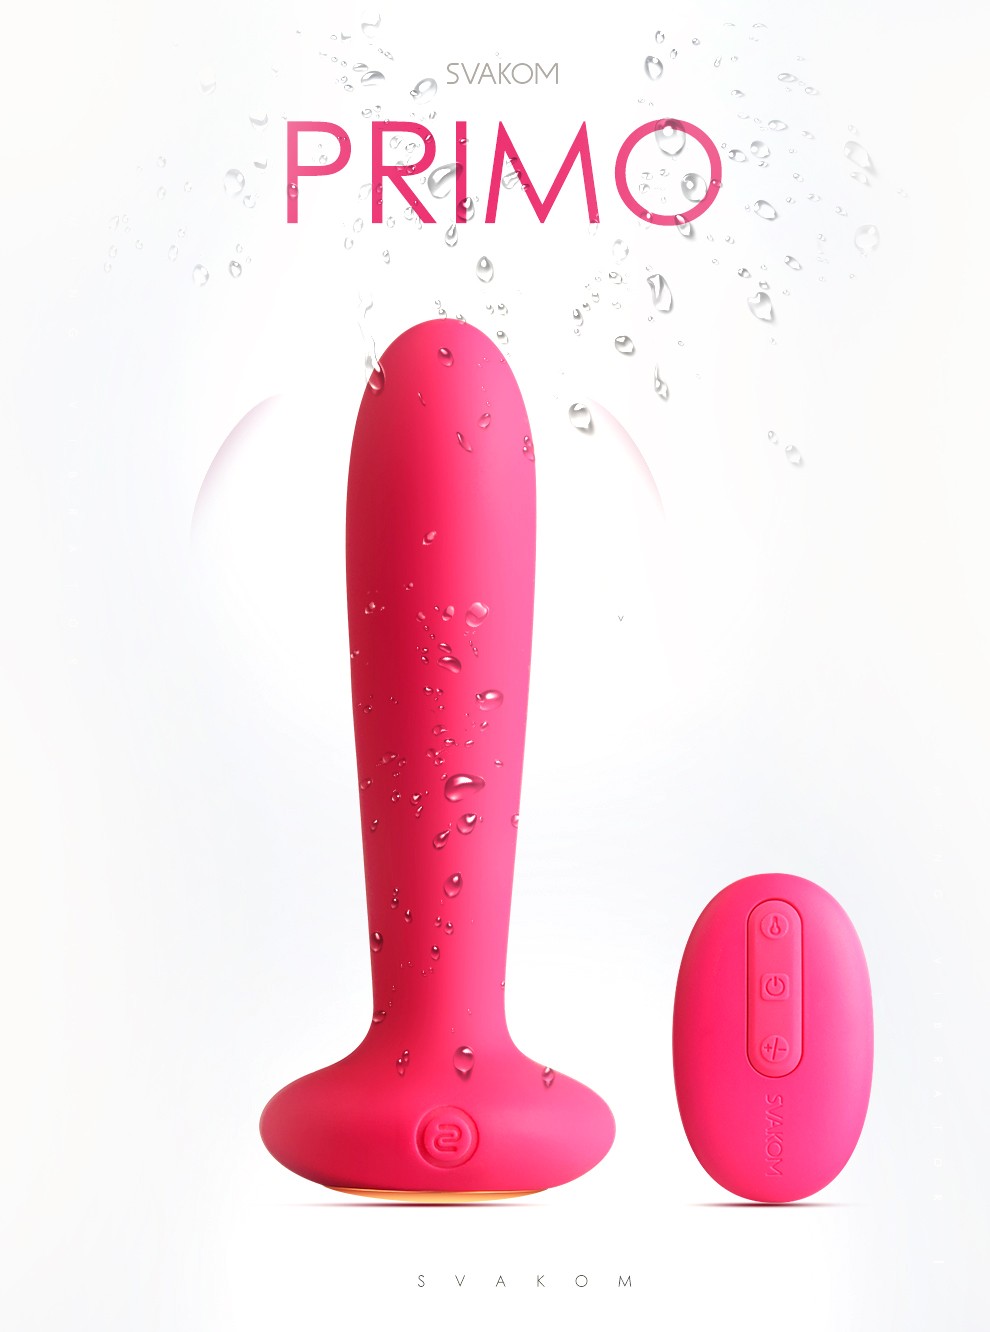 SVAKOM Primo Heating Butt Plug Prostate Massager With Remote Control